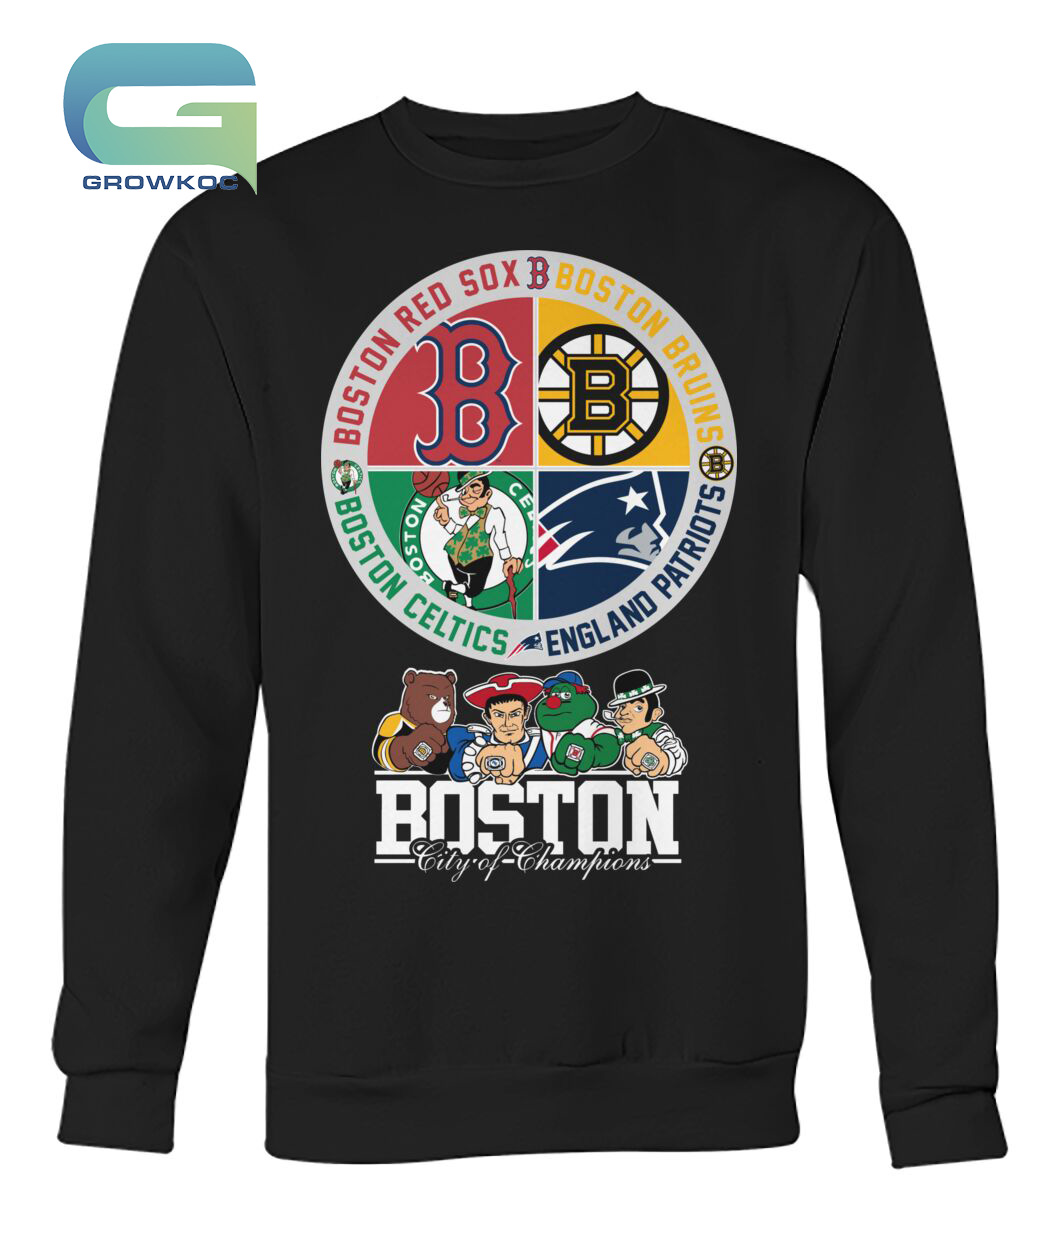 Red sox Boston Bruins new england Patriots Boston celtics shirt